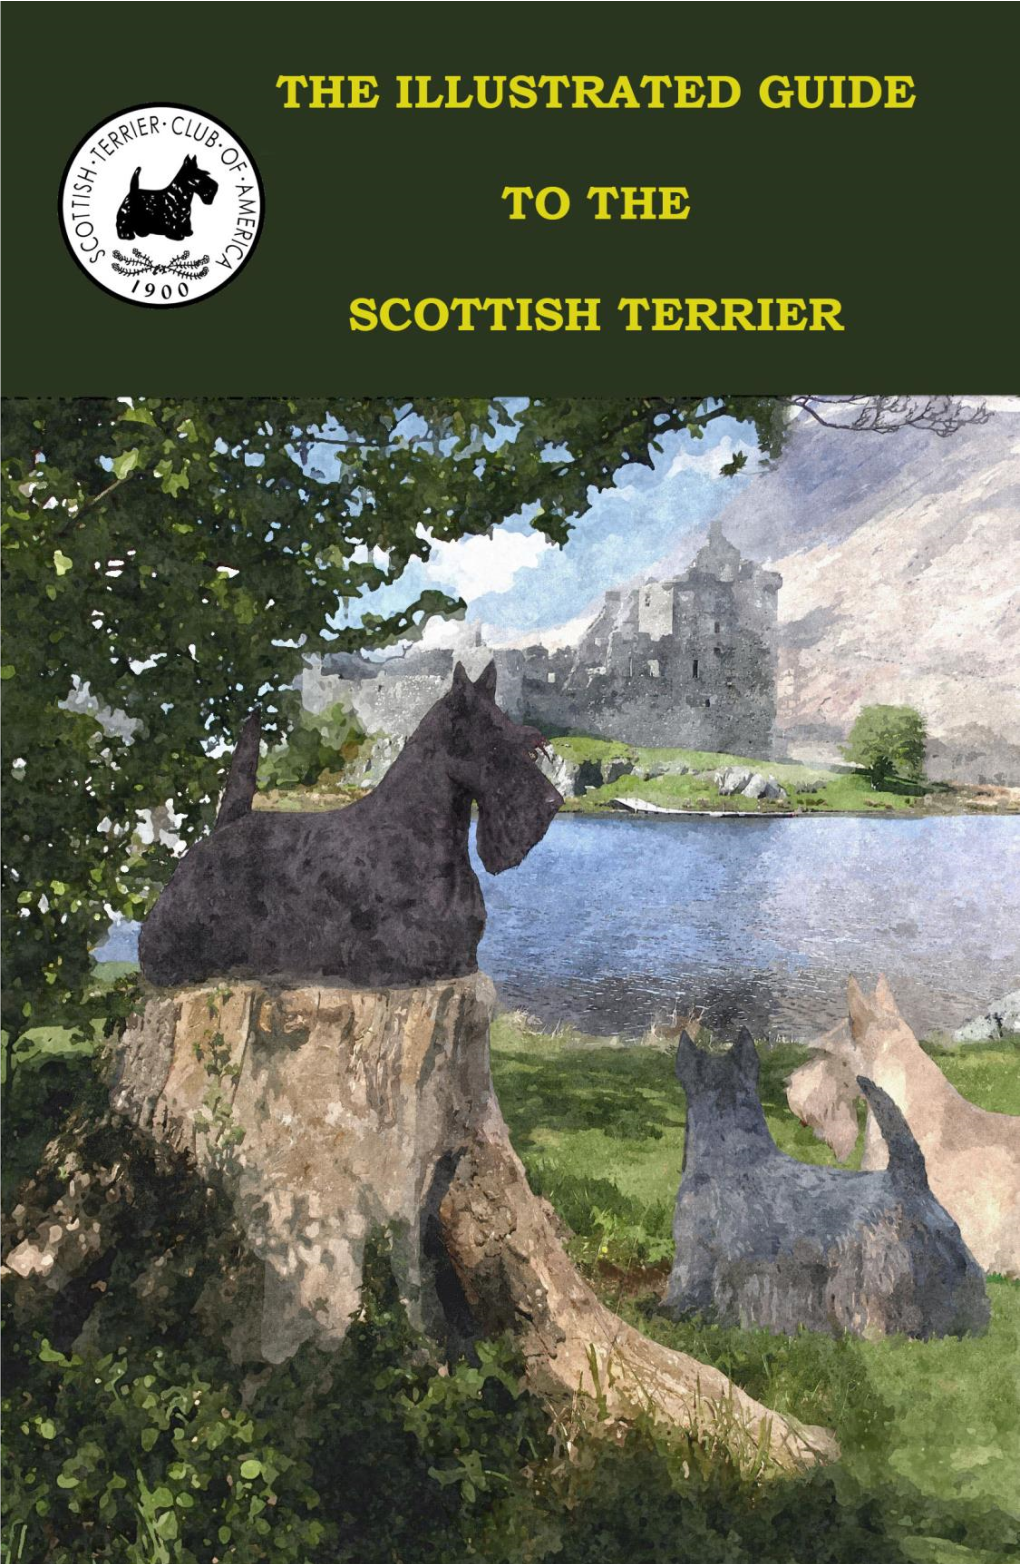 Key Elements of Scottish Terrier Type